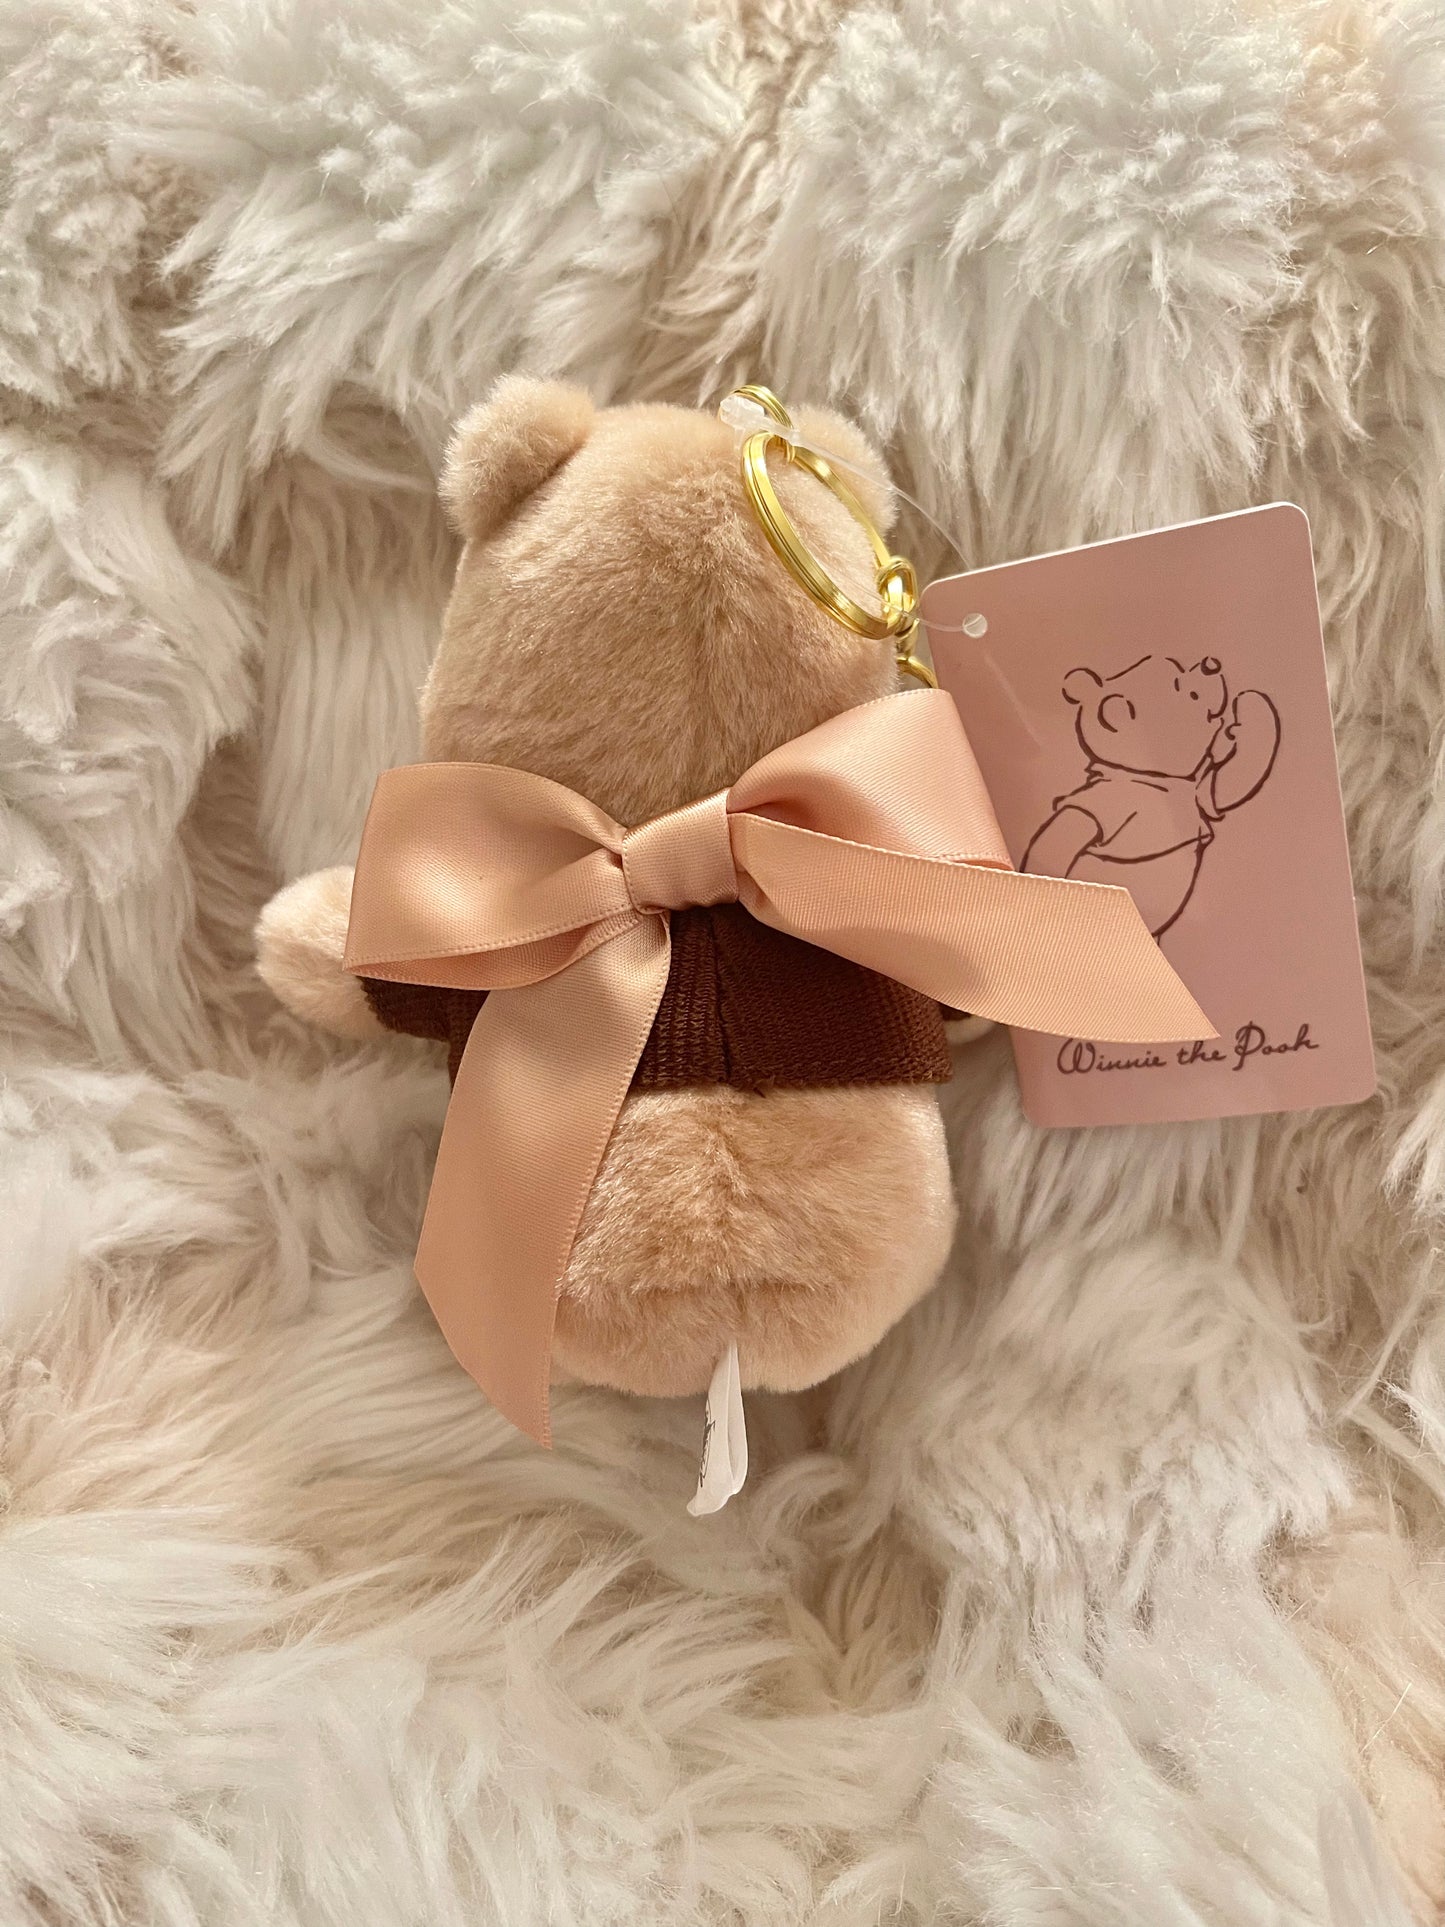 Disney store Japan Valentine’s Day Pooh keychain plush